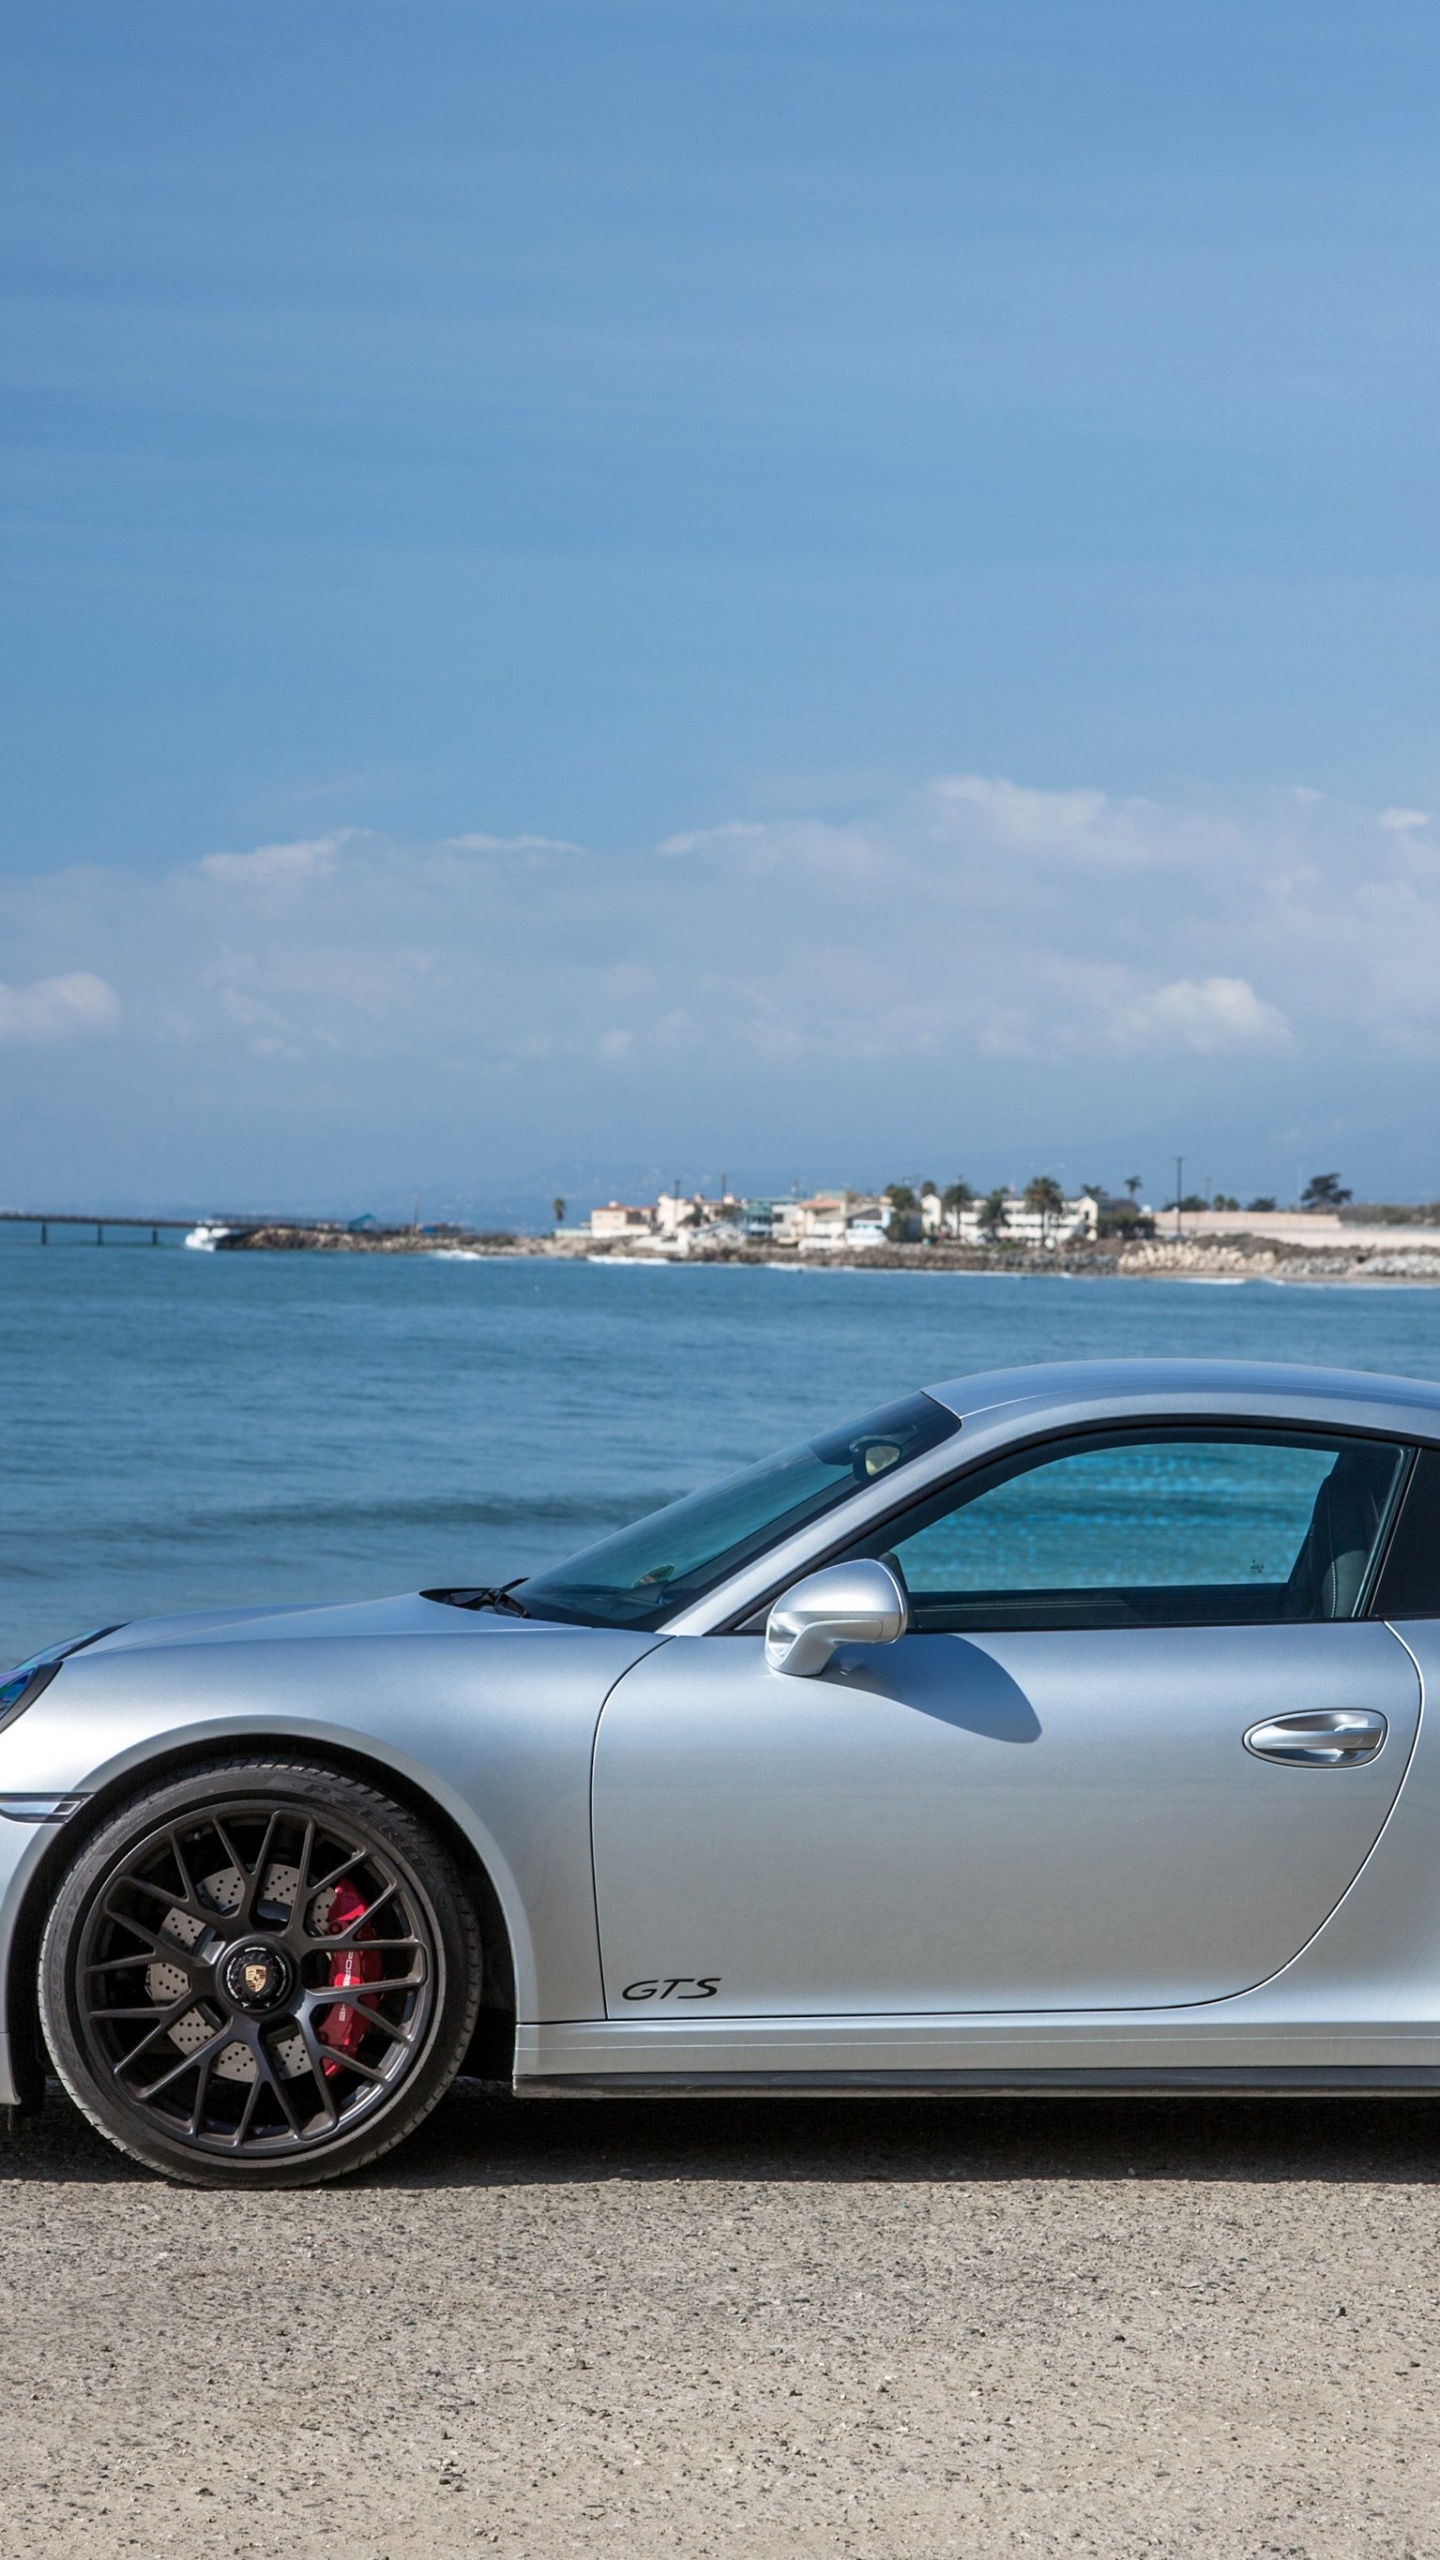 Silver Porsche 911 Parked on Seashore During Daytime. Wallpaper in 1440x2560 Resolution